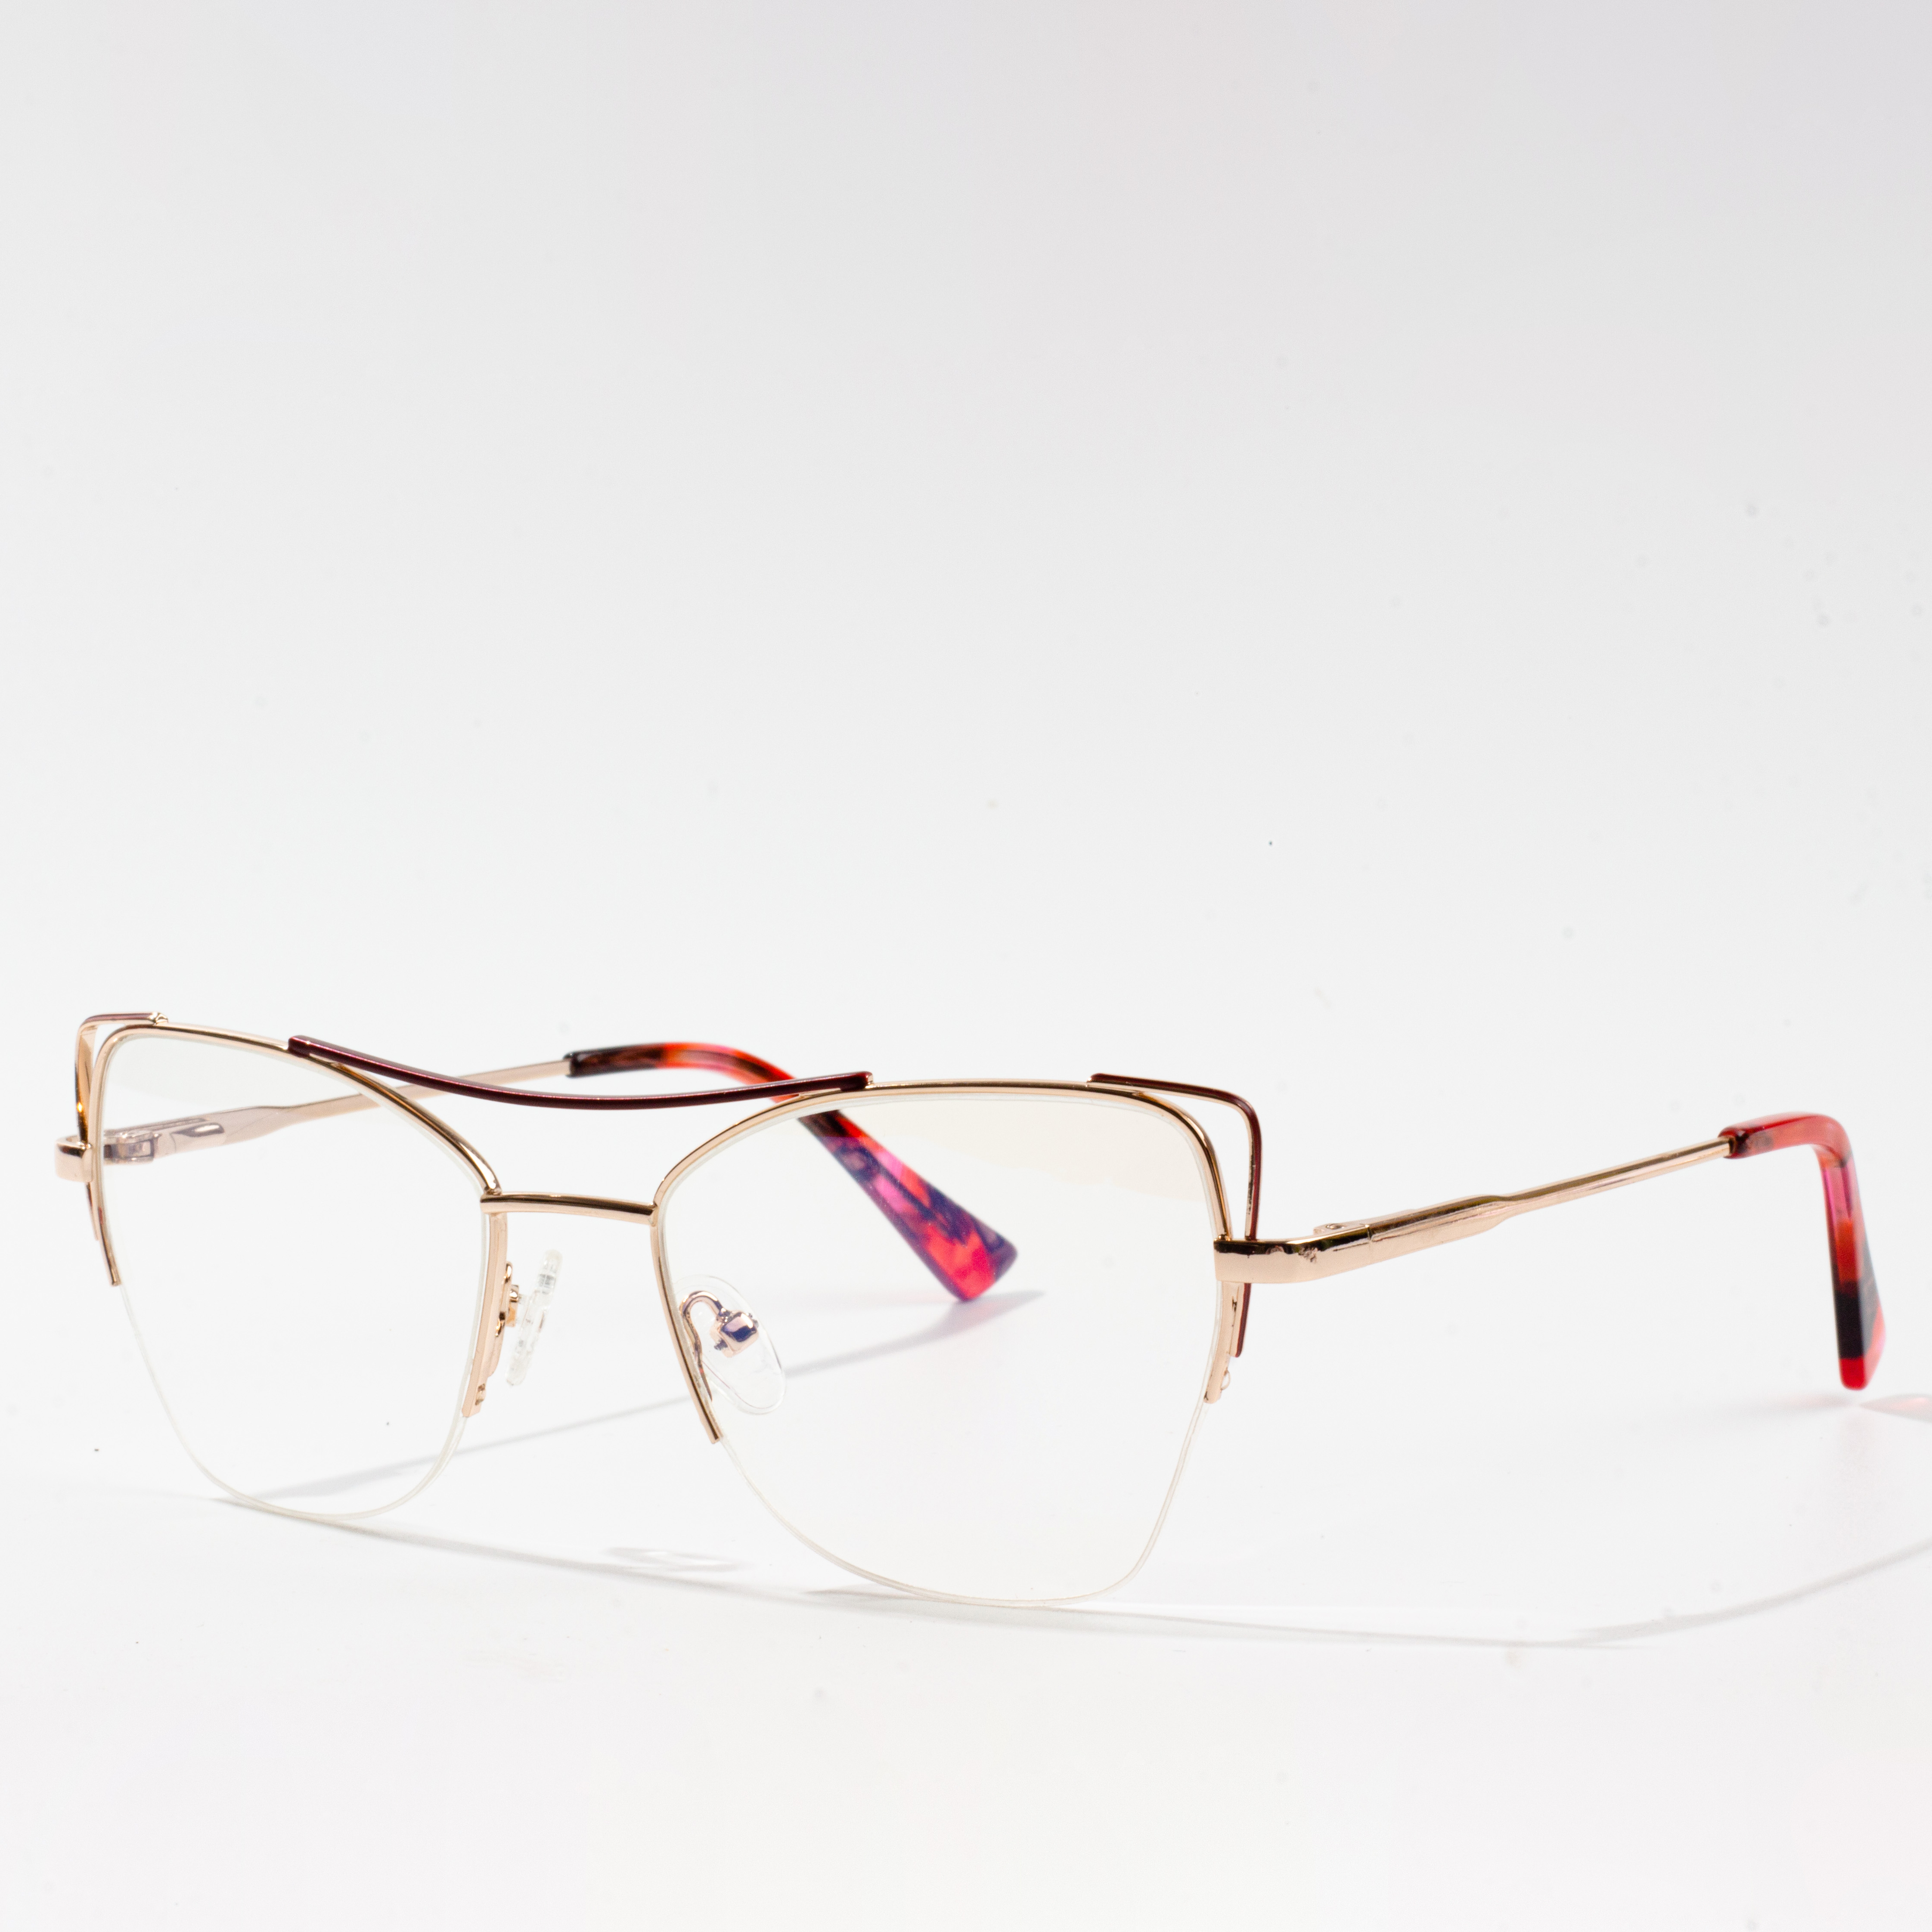 montature per occhiali online